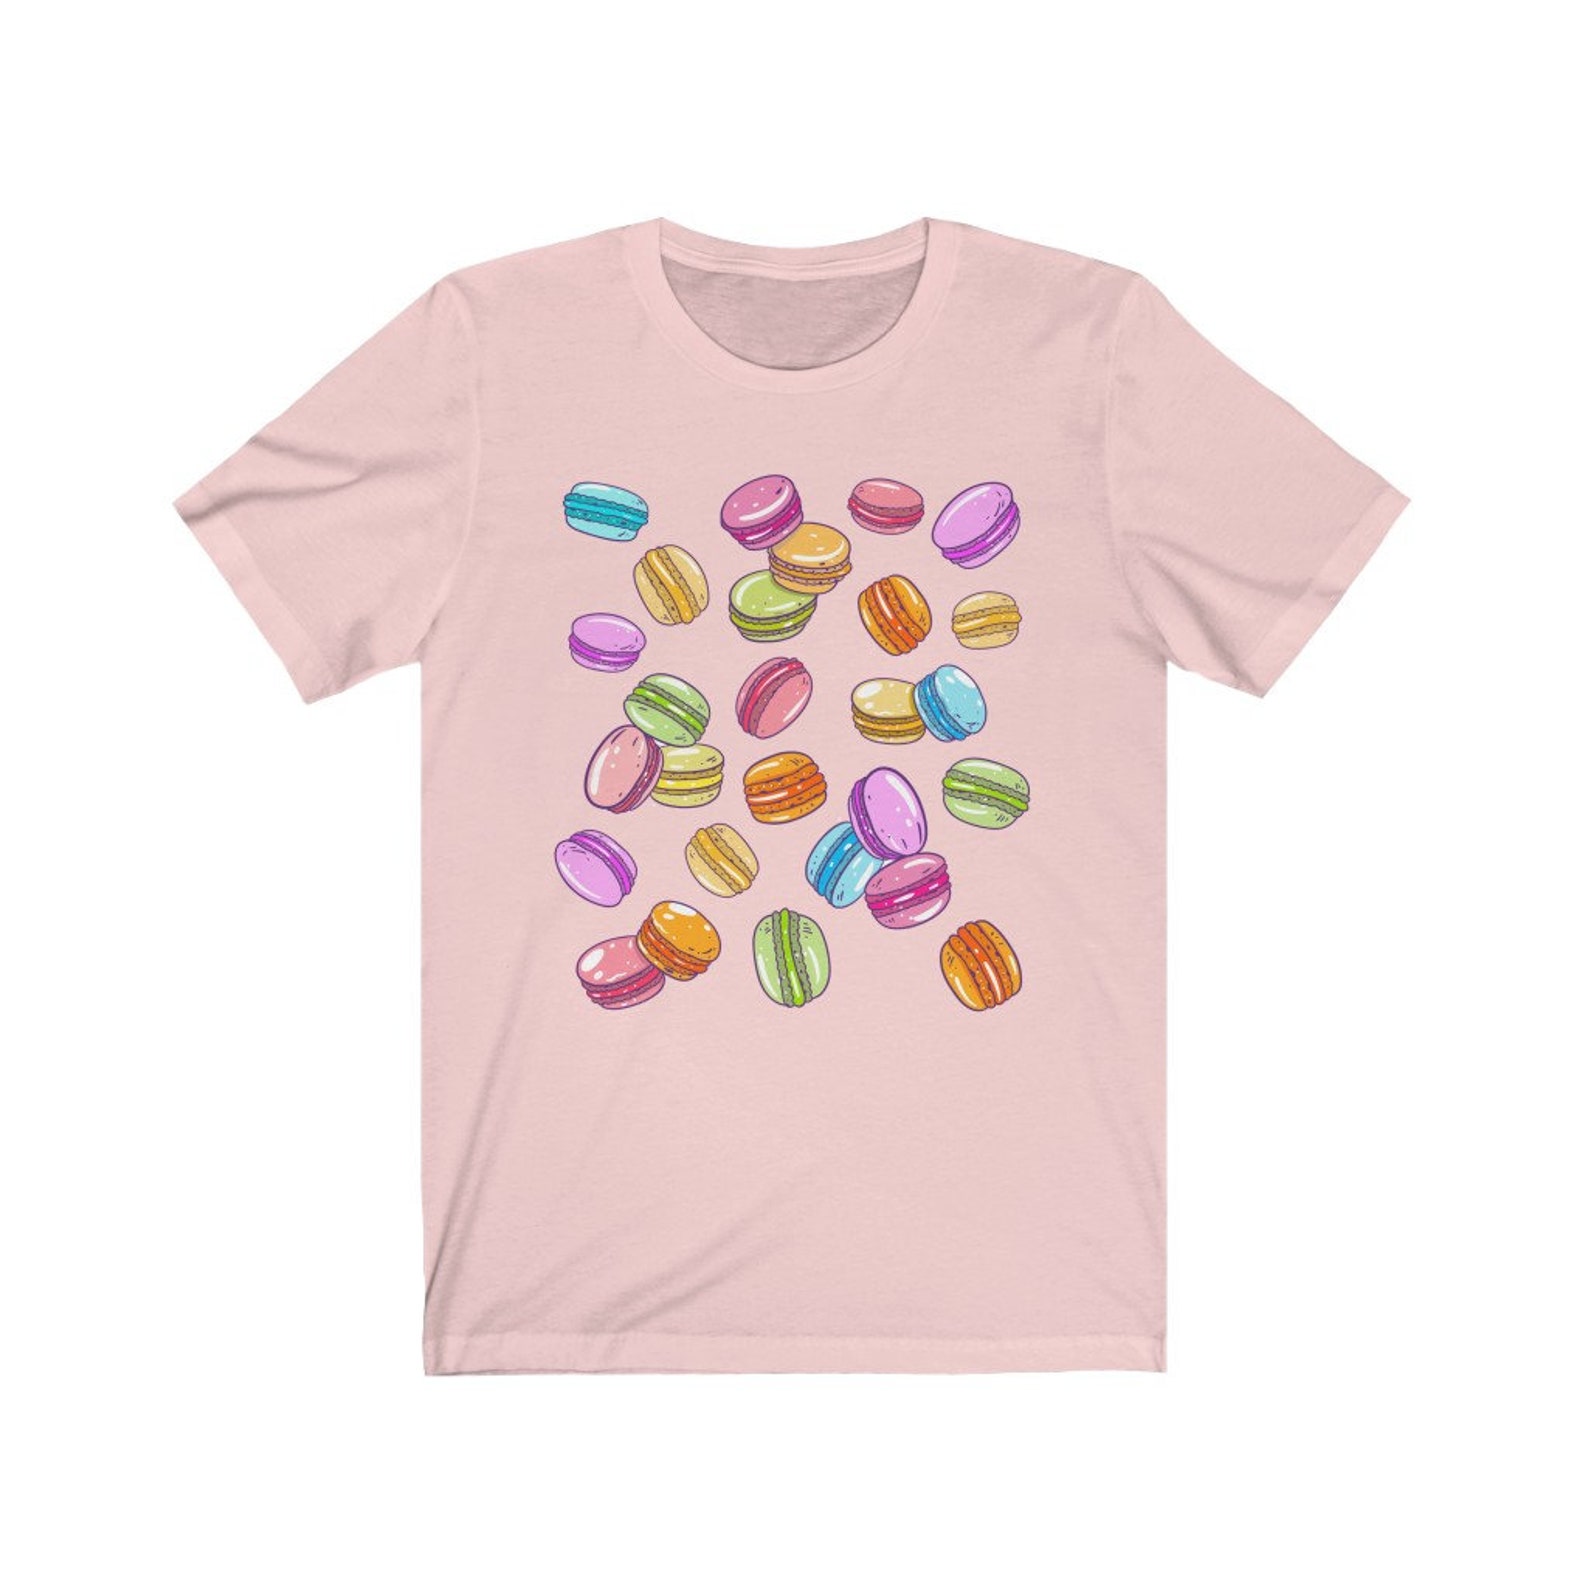 Macaron Shirt Yume Kawaii Tee Cookie T Shirt Baking Gifts | Etsy